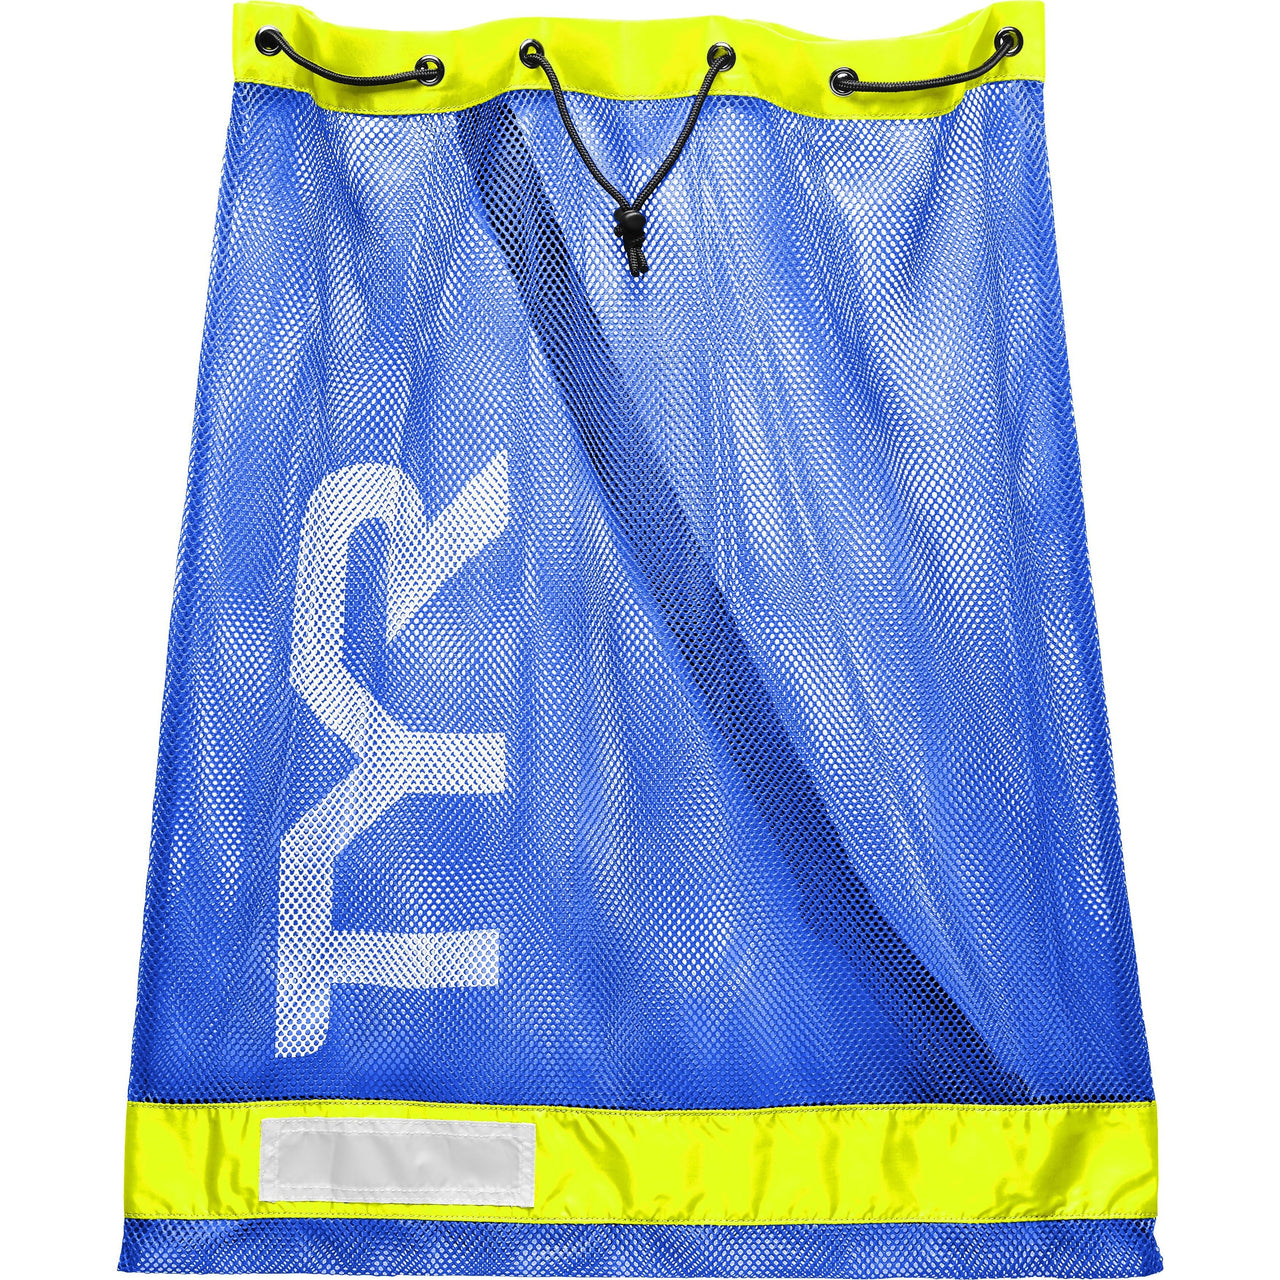 TYR Royal/Yellow Mesh Equipment Bag - Mangata Sport - TYR Swim Bike Run Triathlon